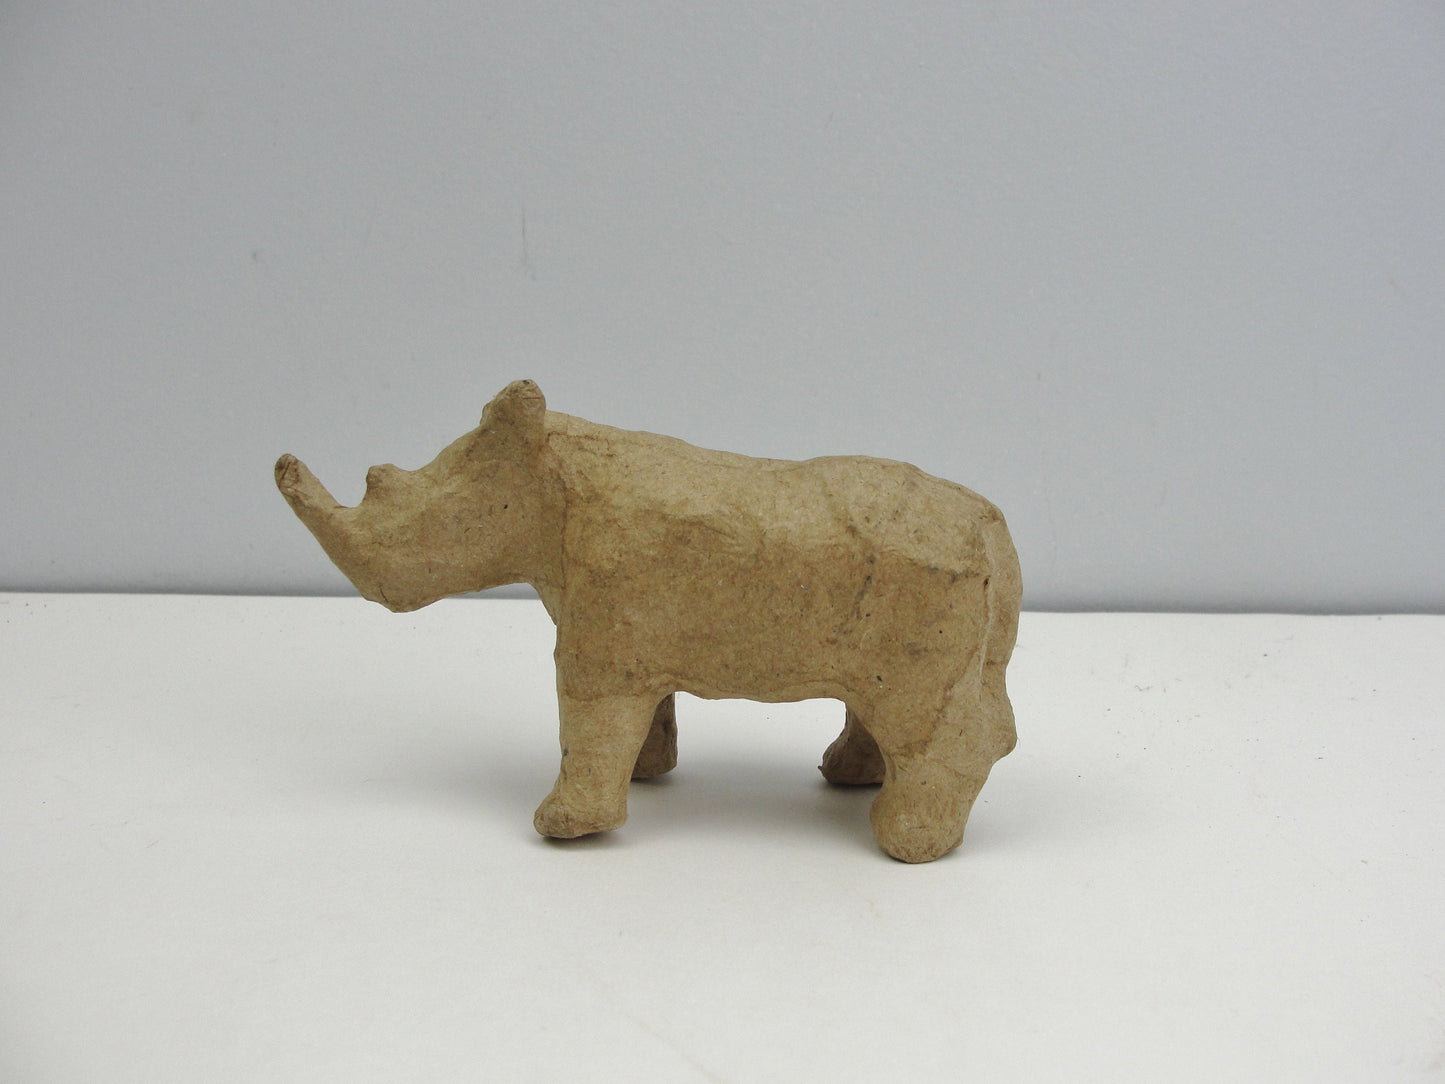 Small paper mache rhinoceros (rhino)